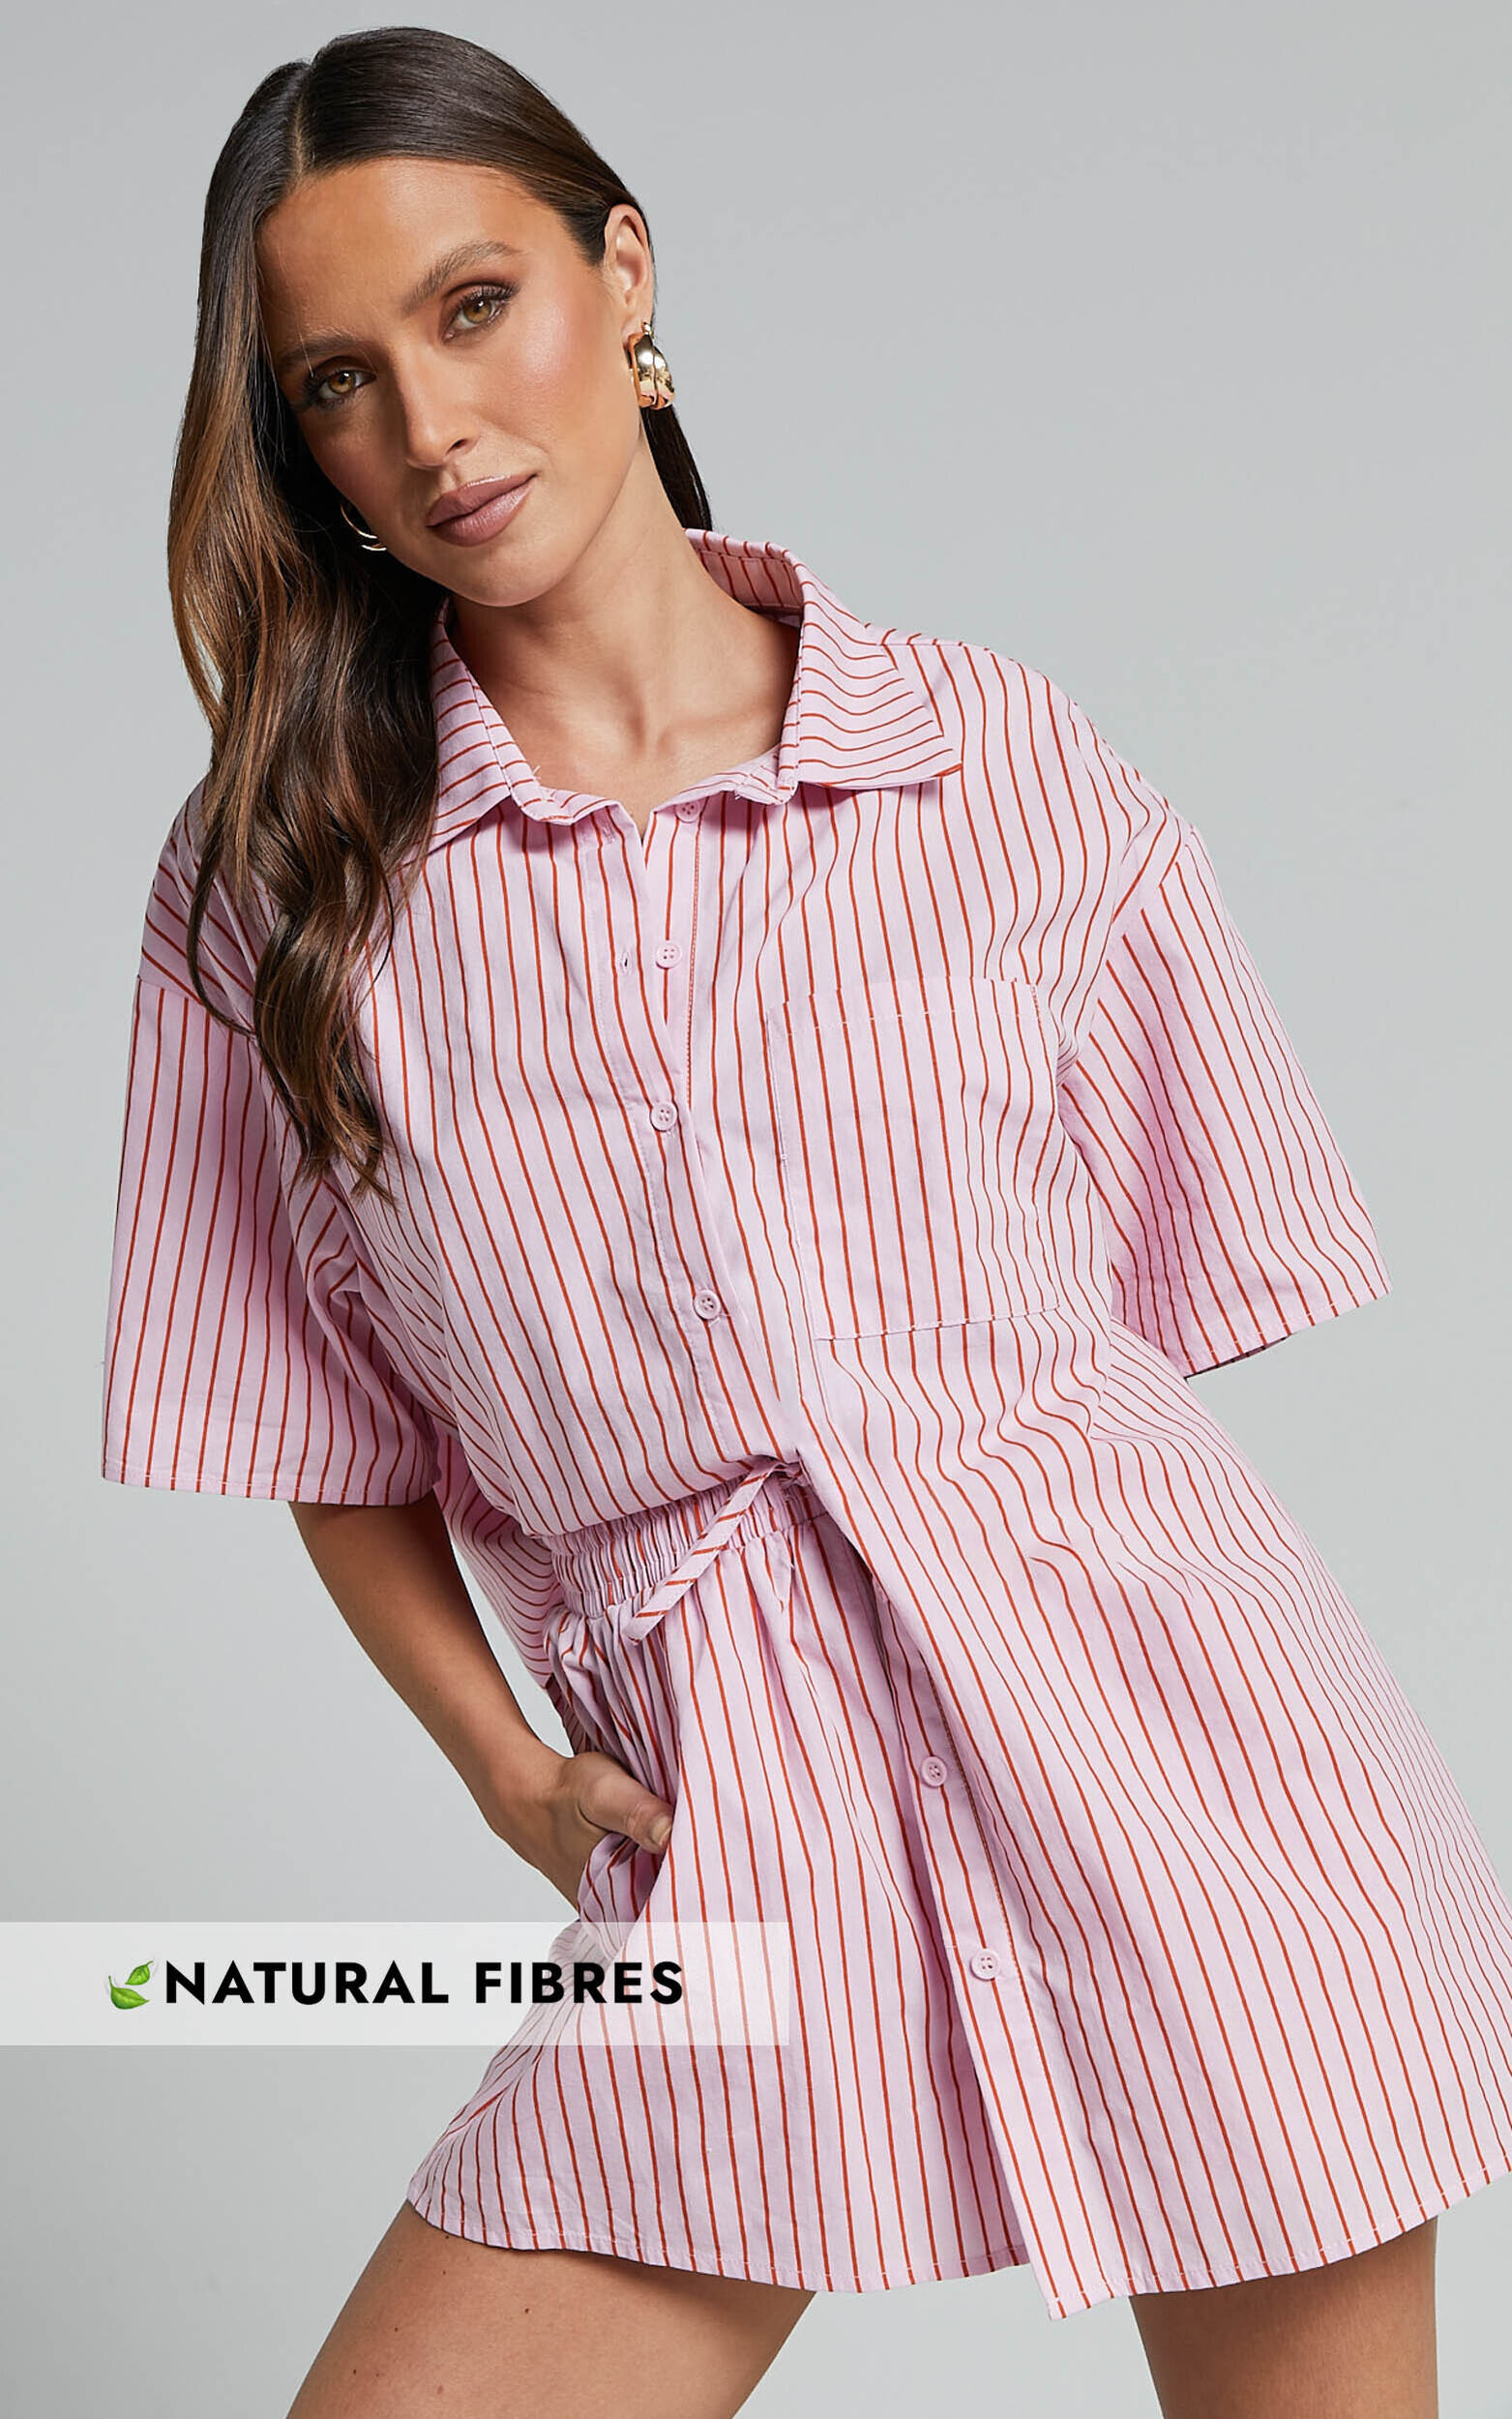 Gijon Shirt - Collared Button Through Shirt in Pink and Red Stripe - 06, PNK1